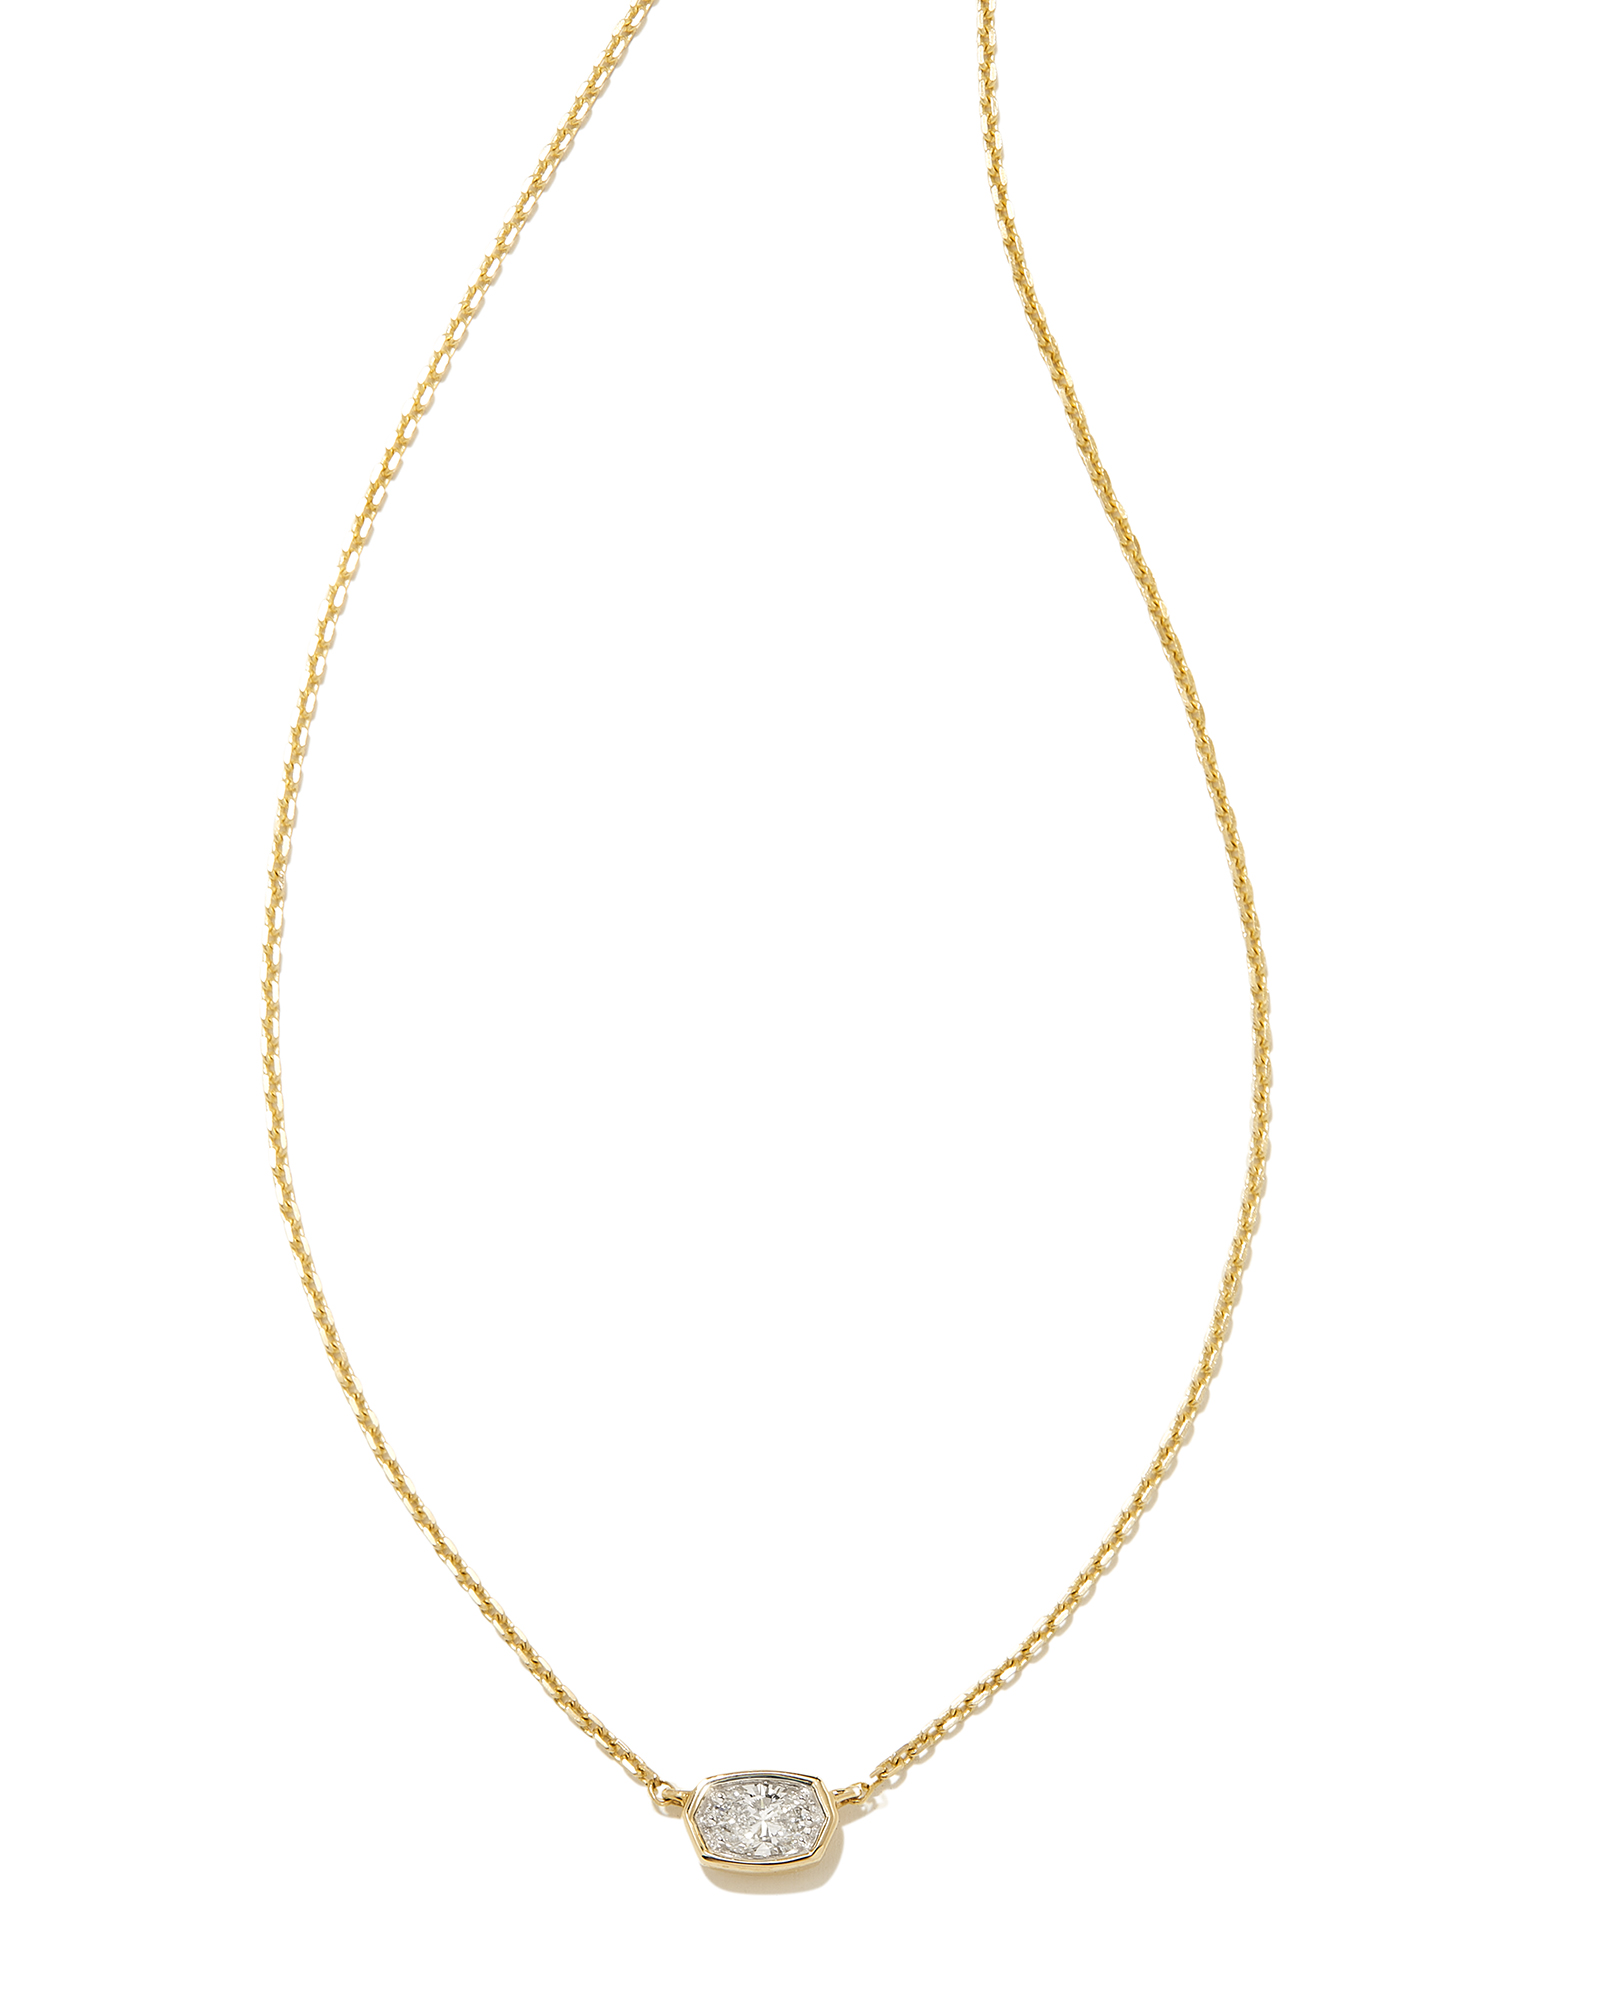 Audrey 14k Yellow Gold Strand Necklace in White Diamond | Kendra Scott